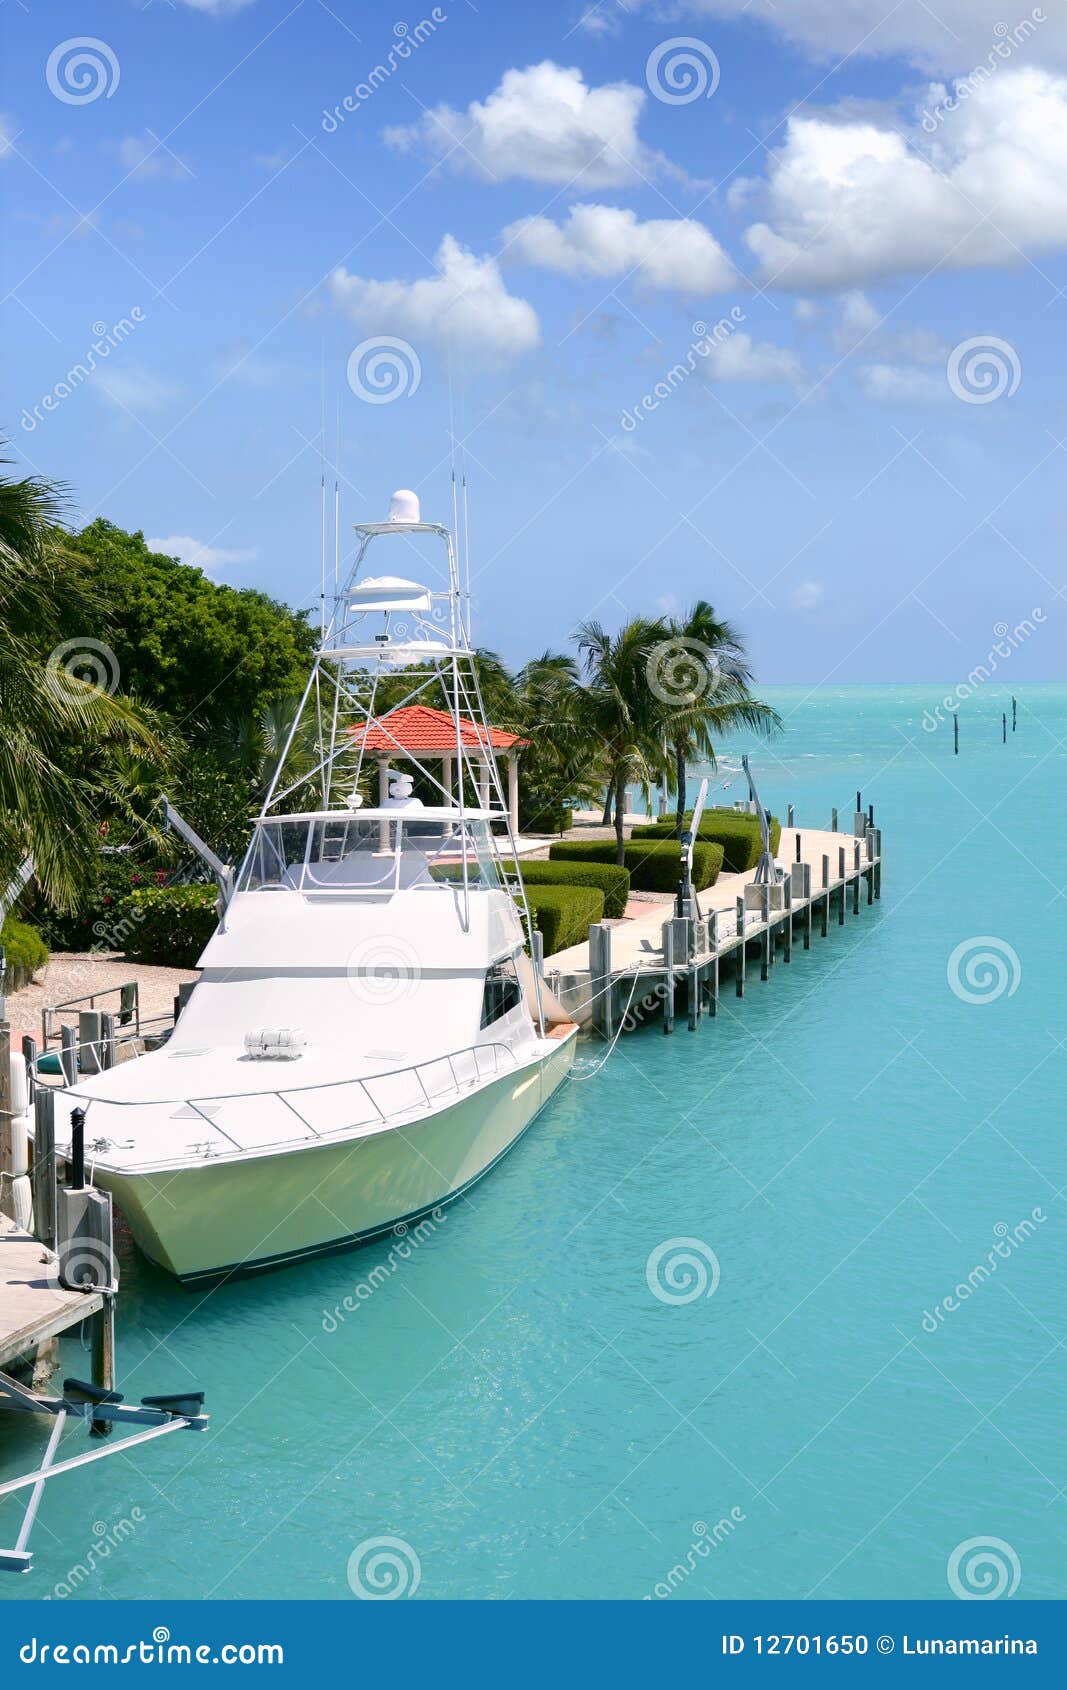 florida keys fishing boats in turquoise waterway